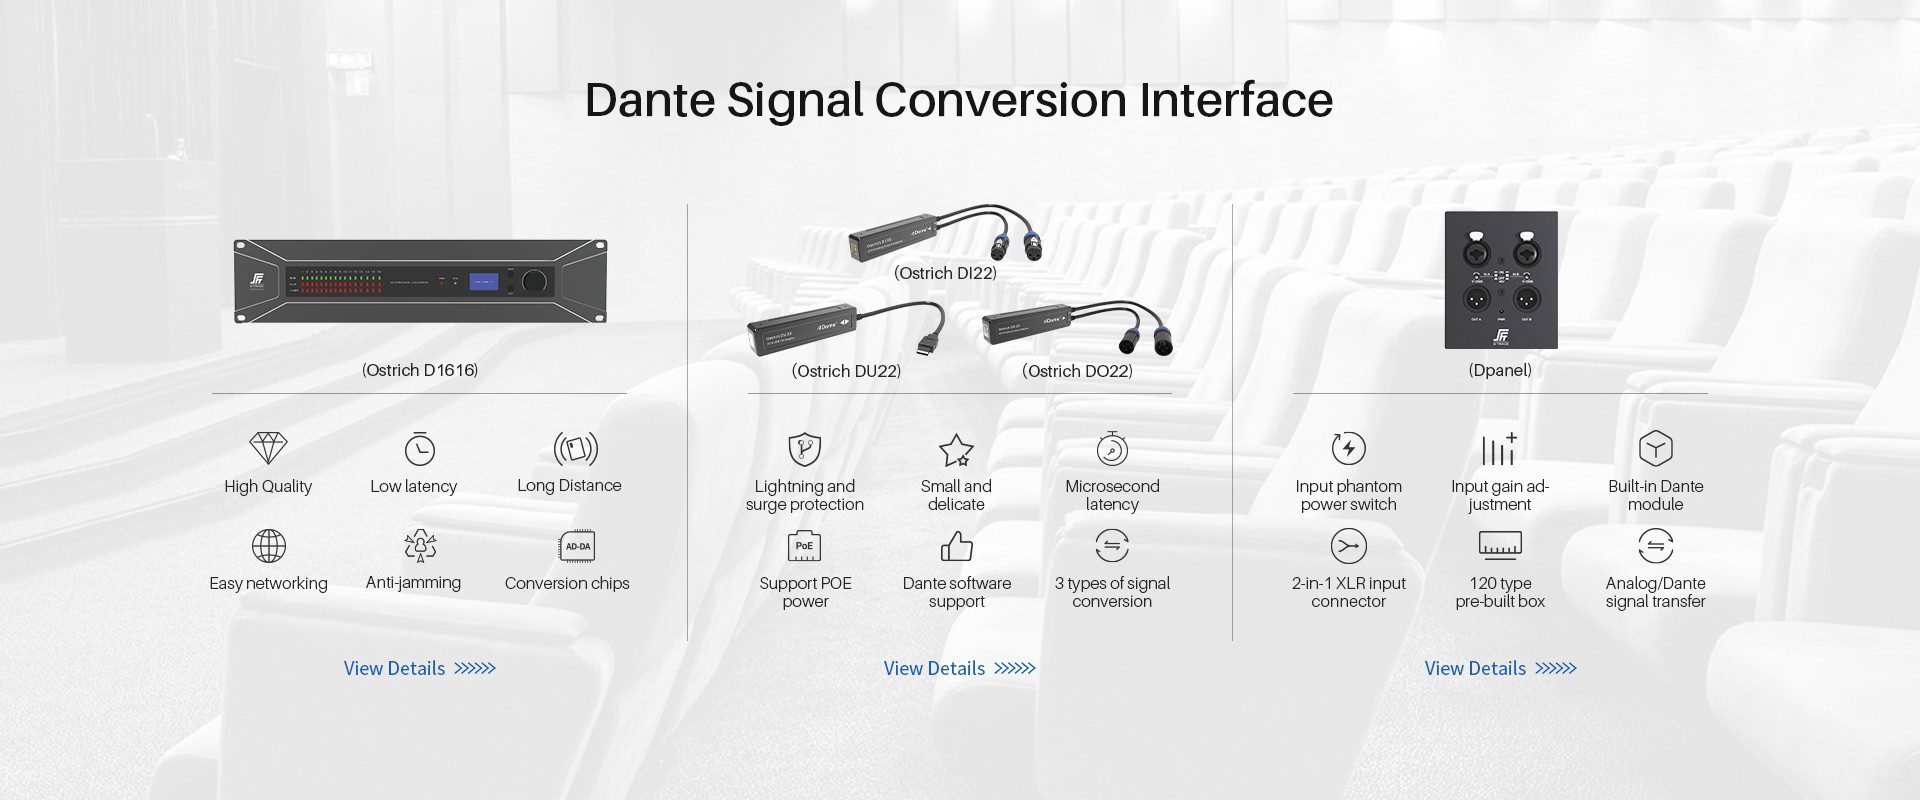 Dante Signal Conversion Interface